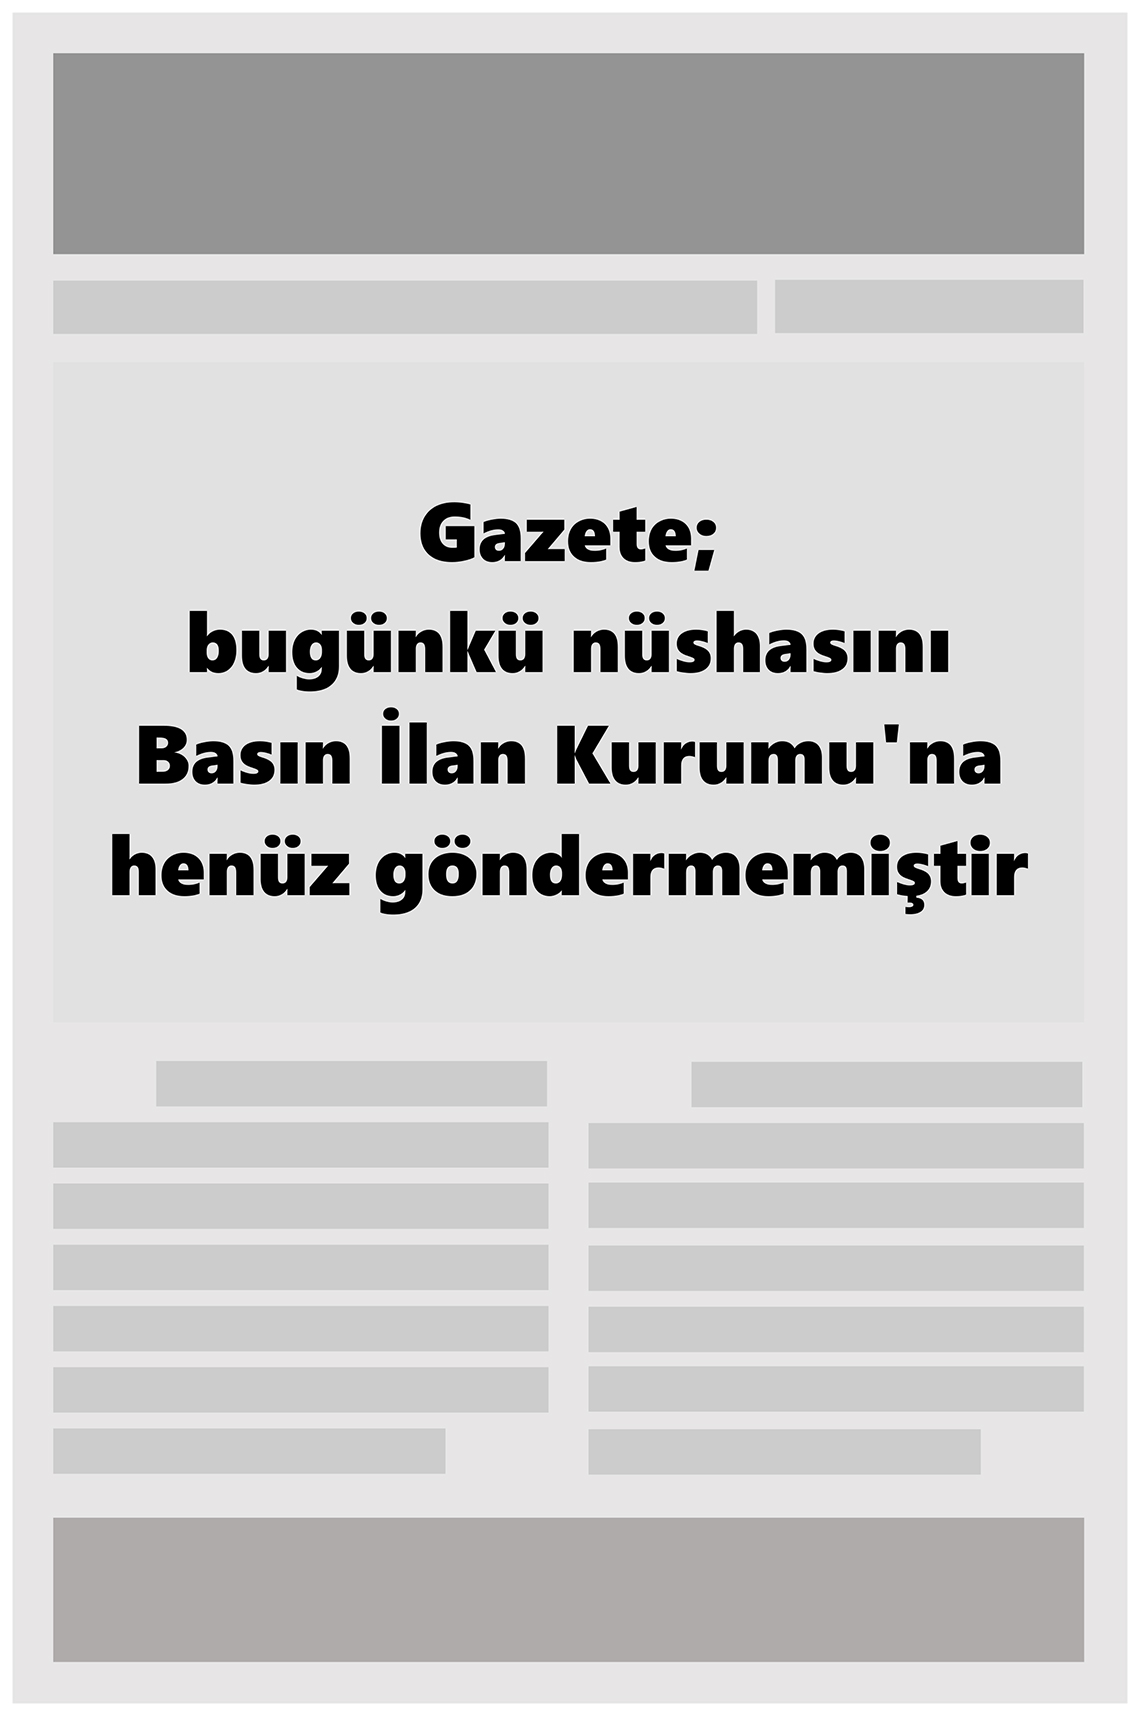 16 Ocak 2022 Balıkesir Politika Gazete Manşeti